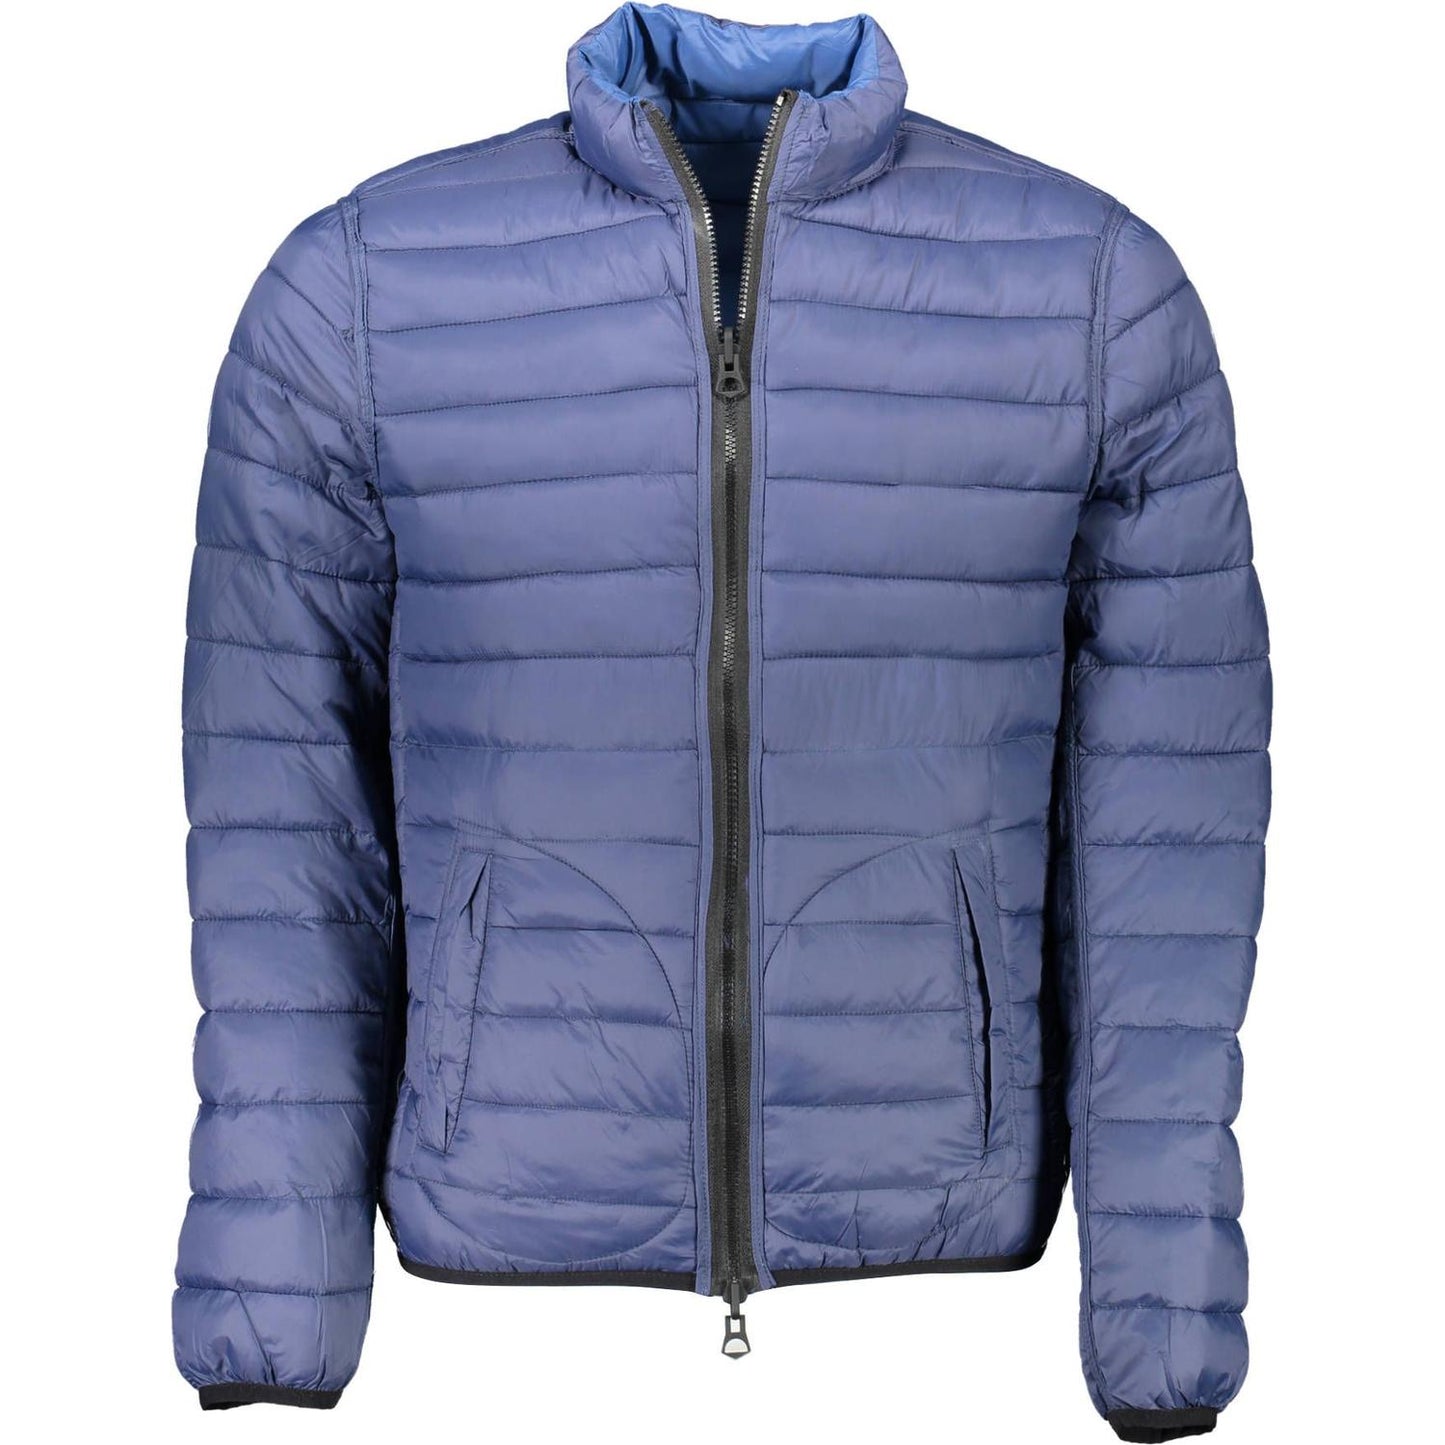 U.S. POLO ASSN. Reversible Long-Sleeve Jacket in Blue reversible-long-sleeve-jacket-in-blue